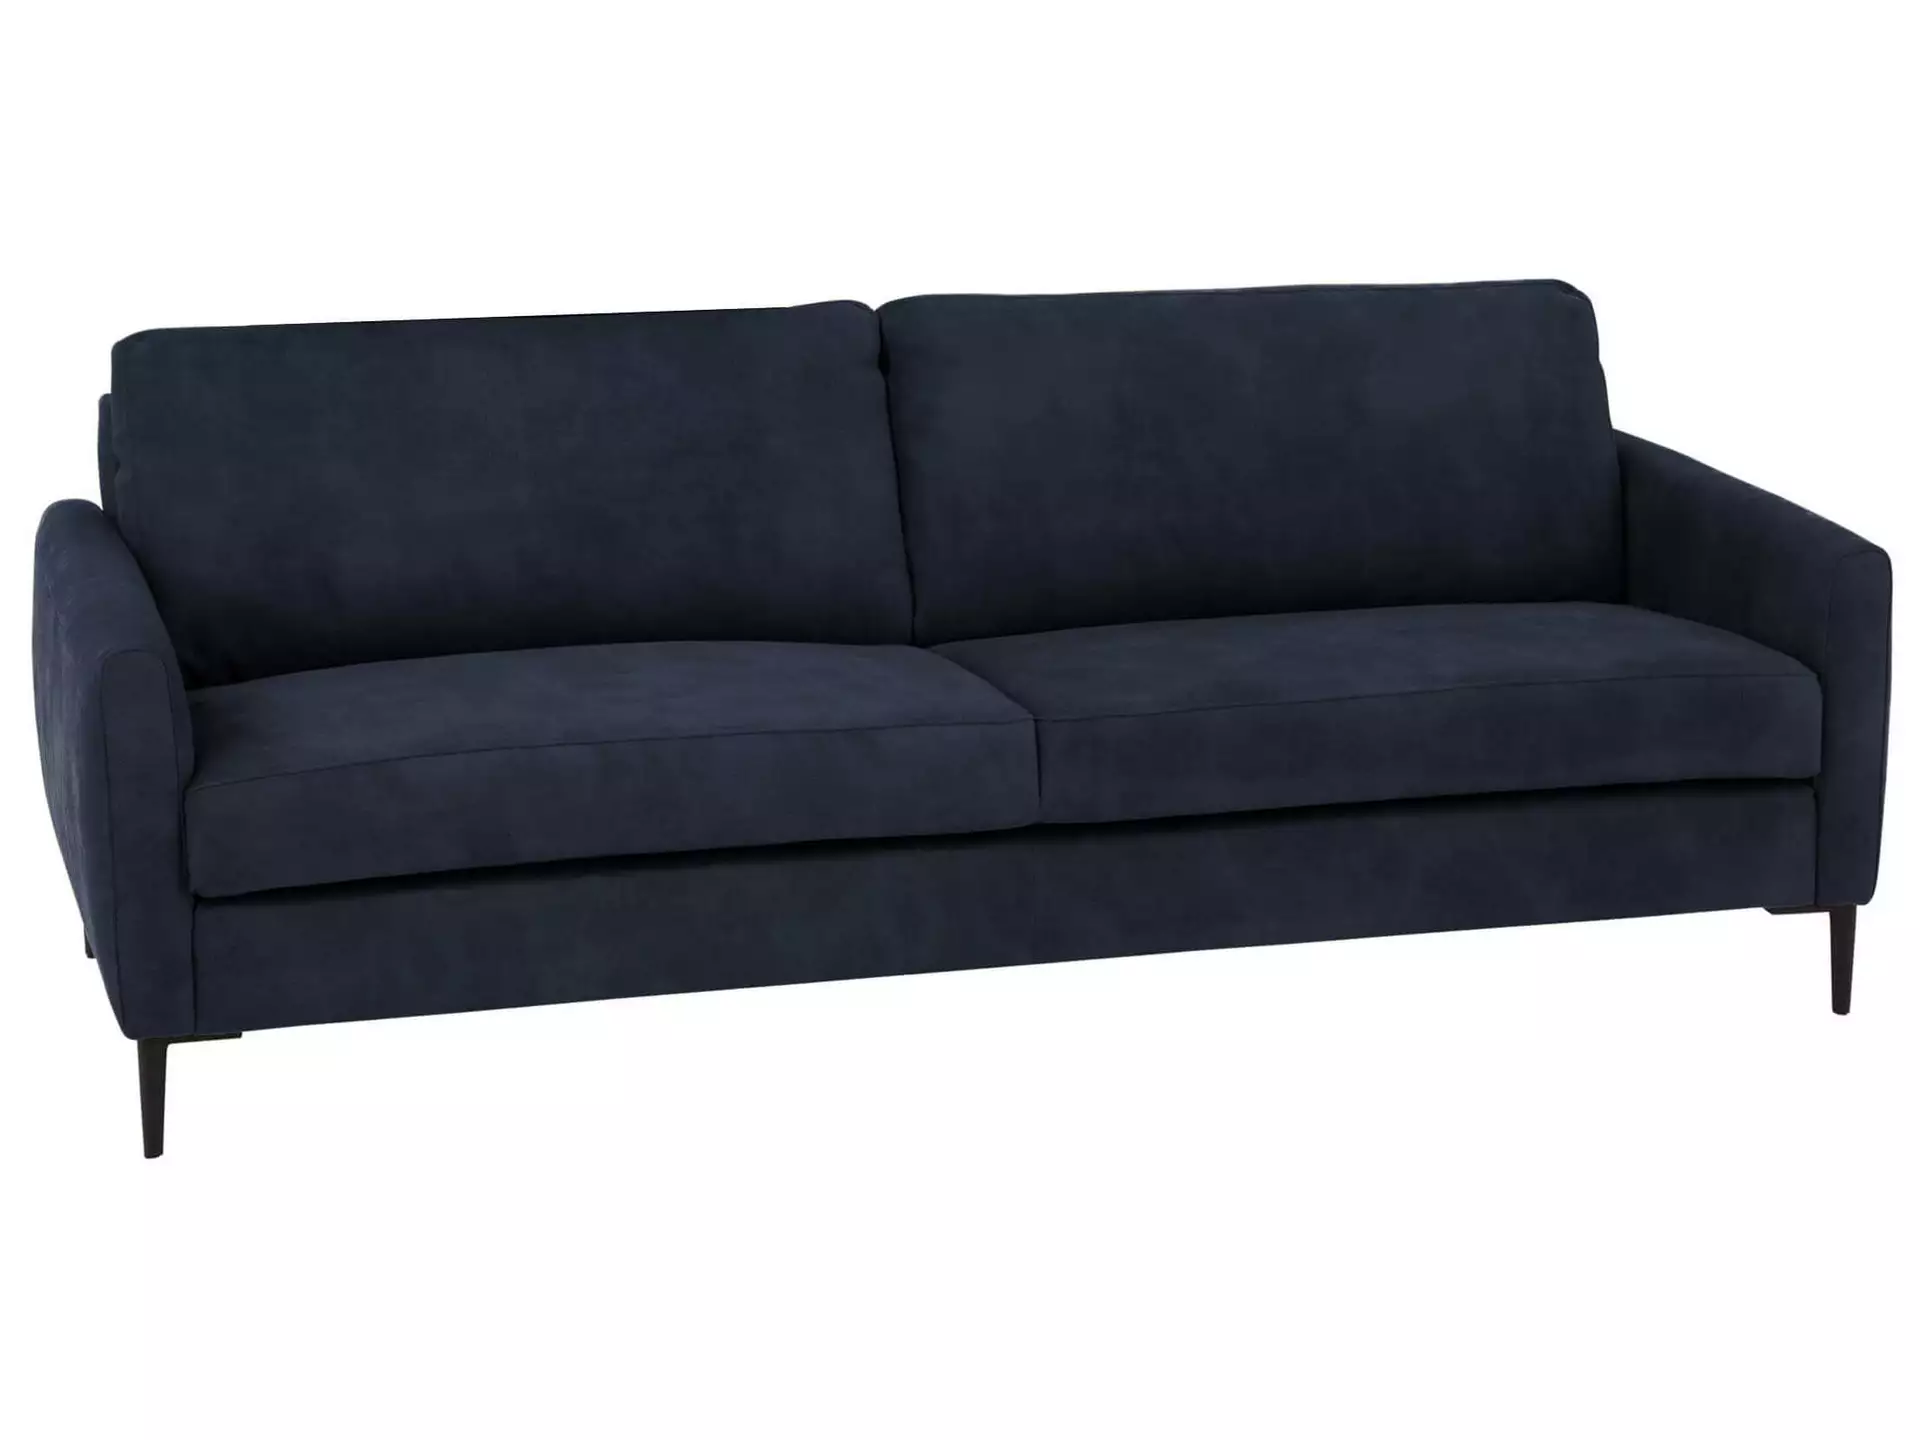 Sofa Antonio Basic B: 196 cm Schillig Willi / Farbe: Blau / Material: Leder Basic